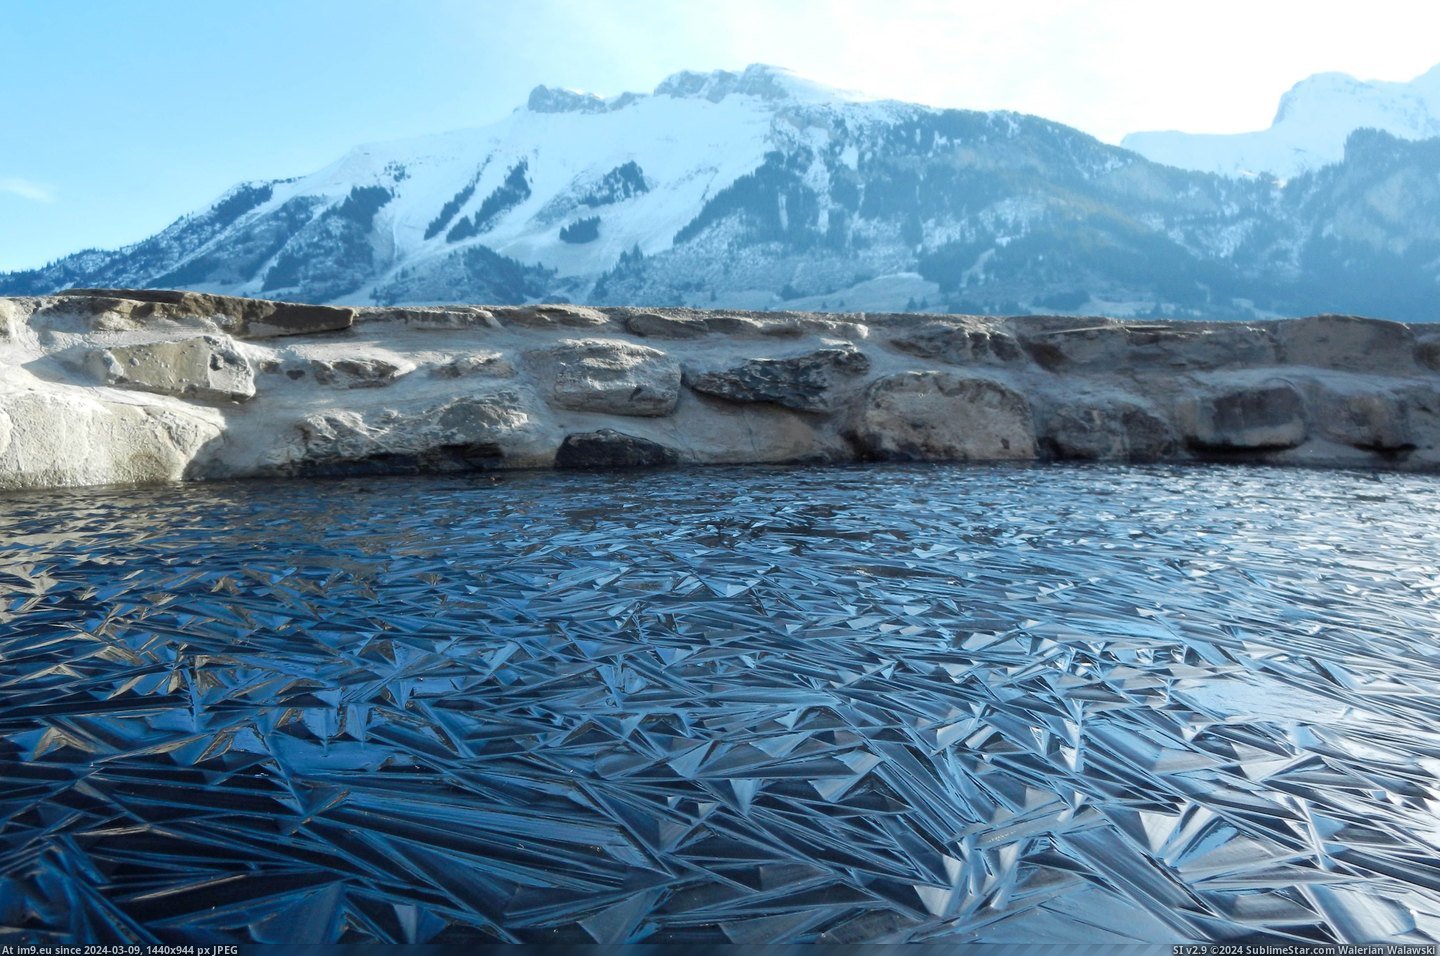 #Frozen #Pond #Switzerland [Pics] Frozen pond in Switzerland Pic. (Image of album My r/PICS favs))